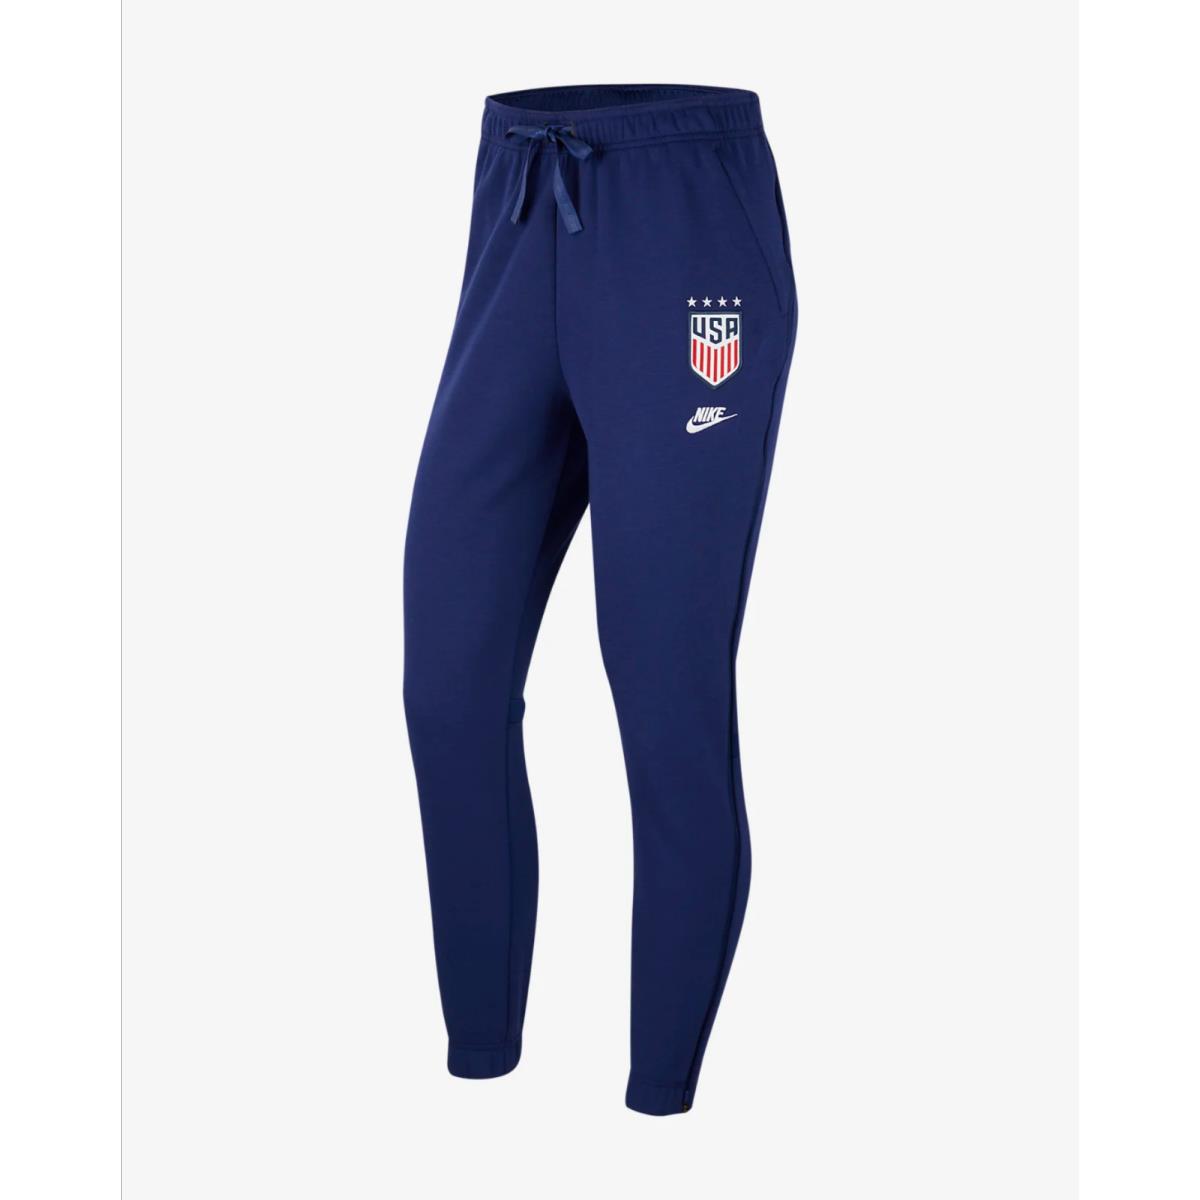 Nike Team Usa 2020 Dry Pants Women Soccer Loyal Blue CJ7953 421